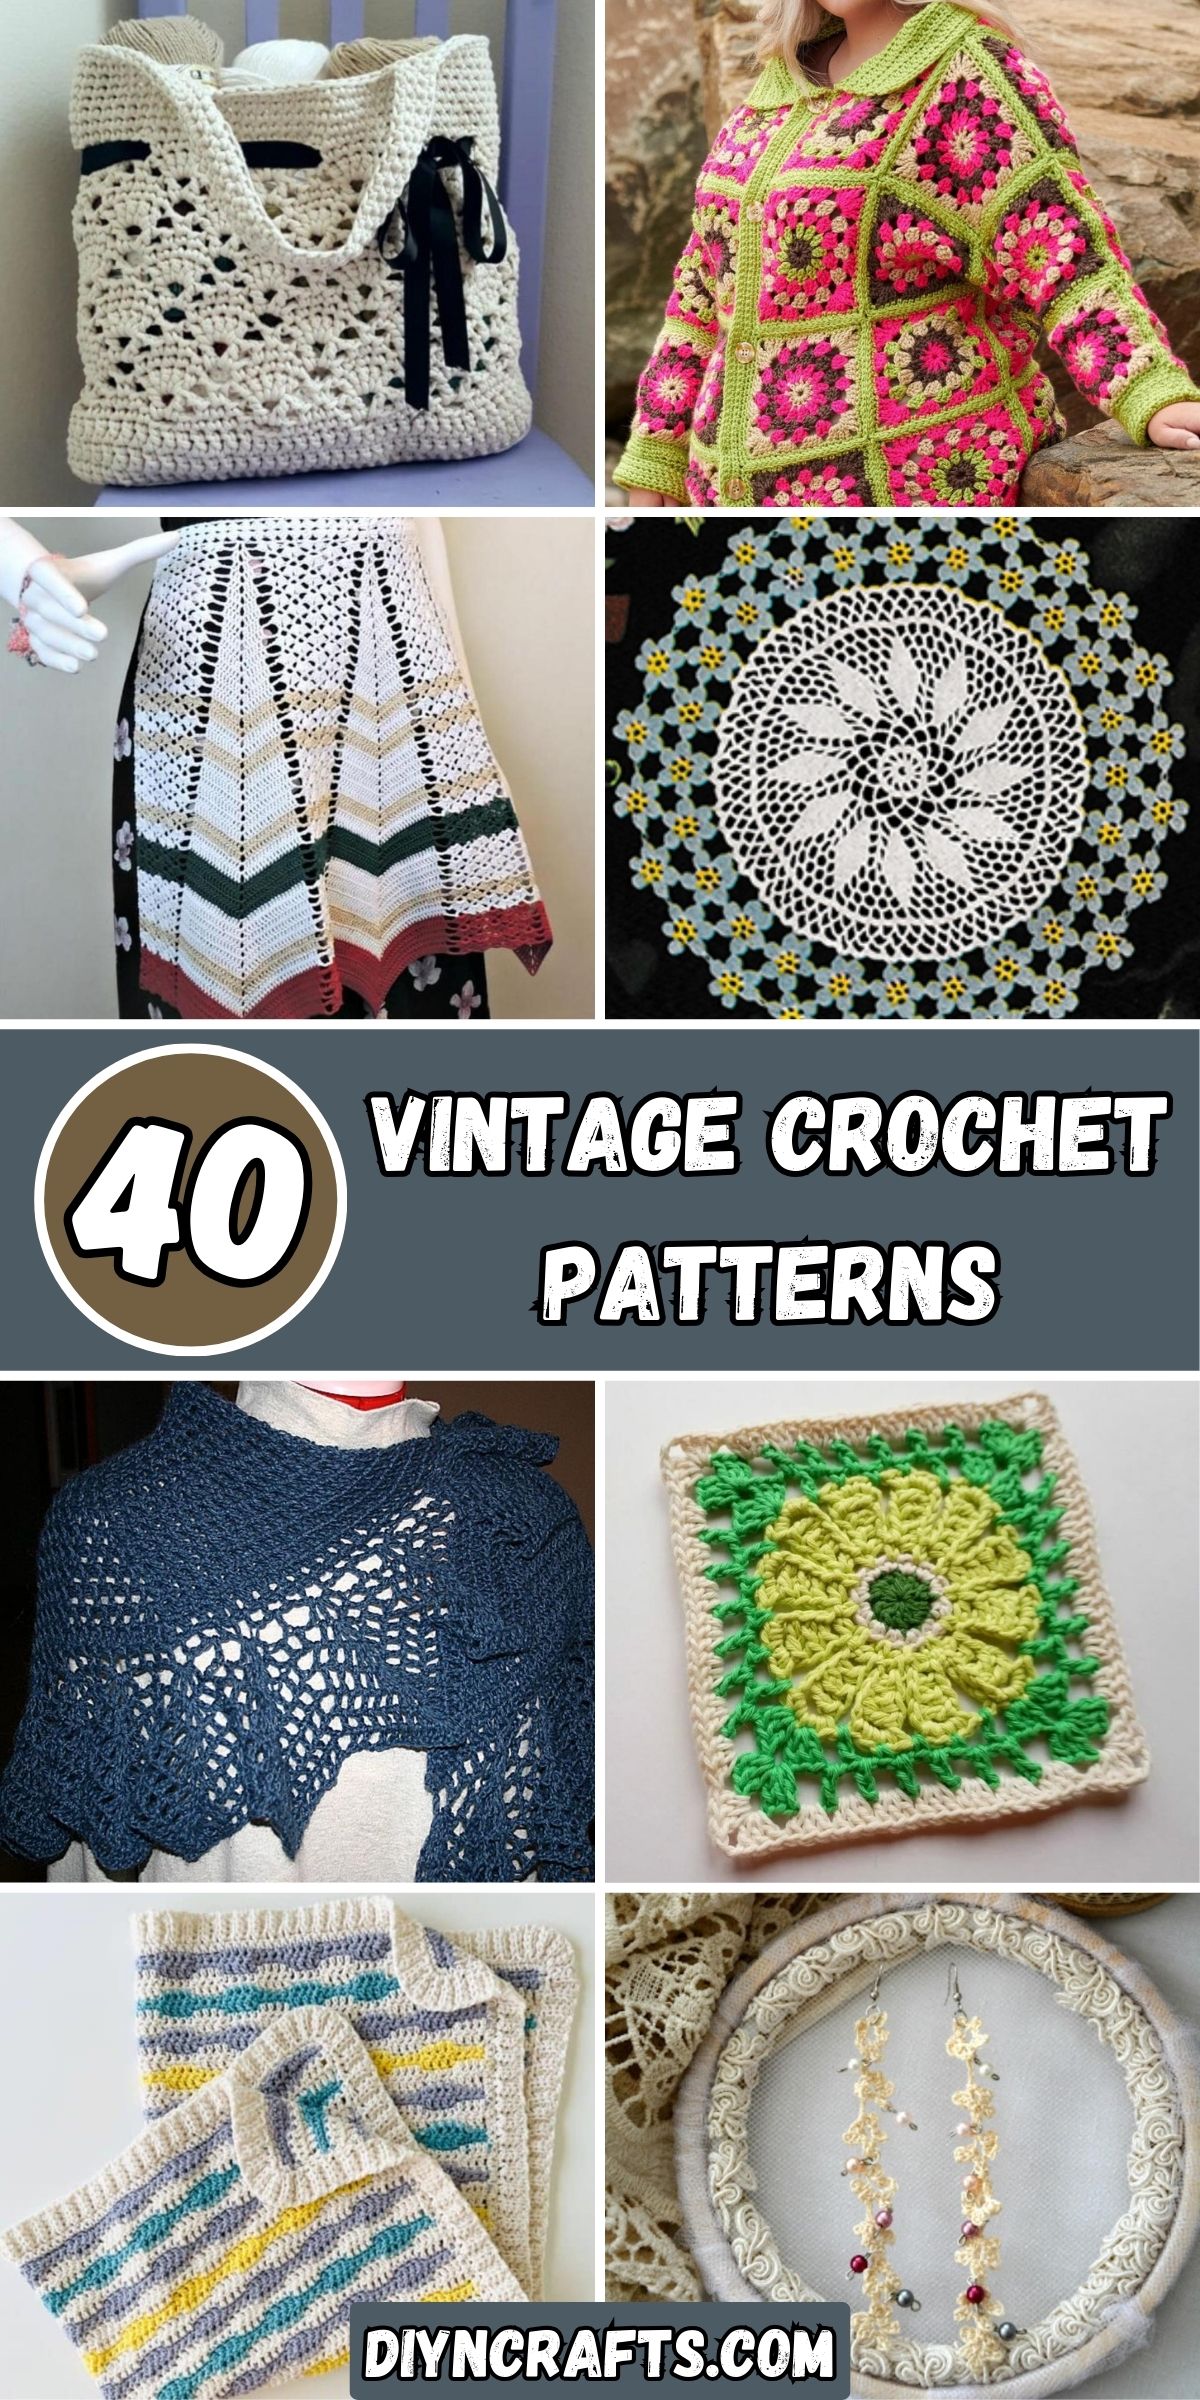 40 Vintage Crochet Patterns collage.